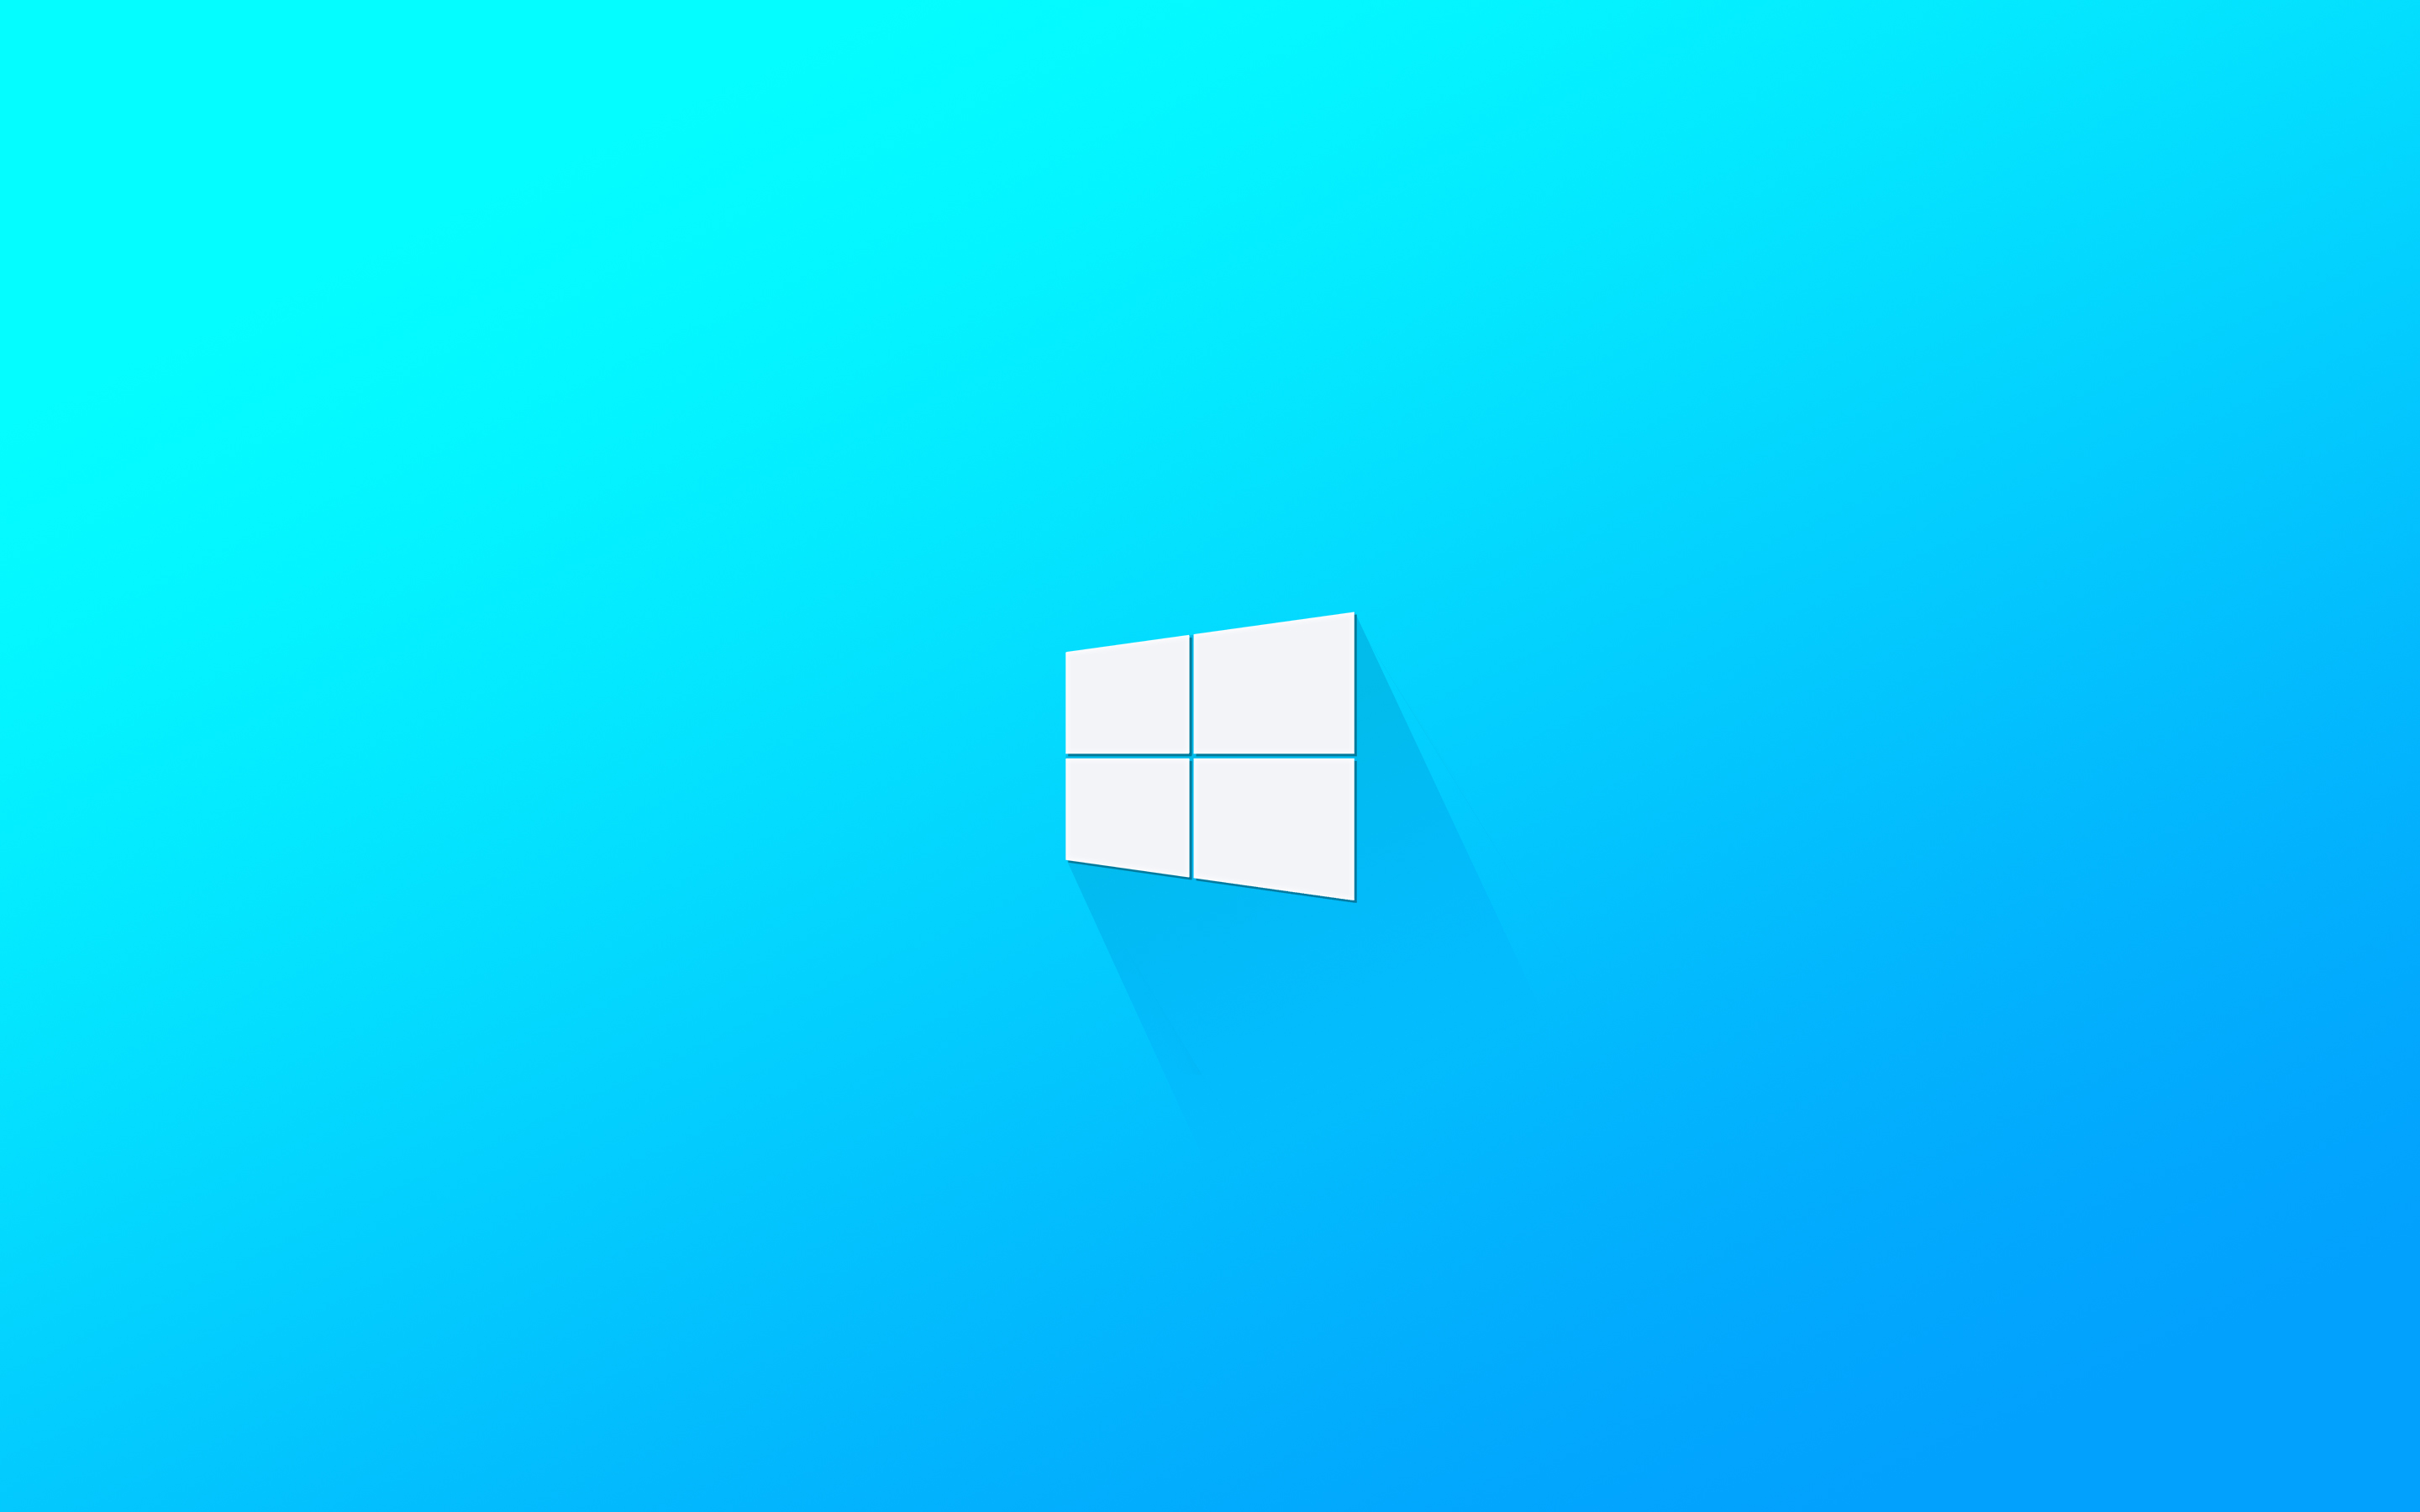 General 2880x1800 minimalism logo Windows 10 Windows 11 blue background simple background Microsoft Windows windows logo operating system